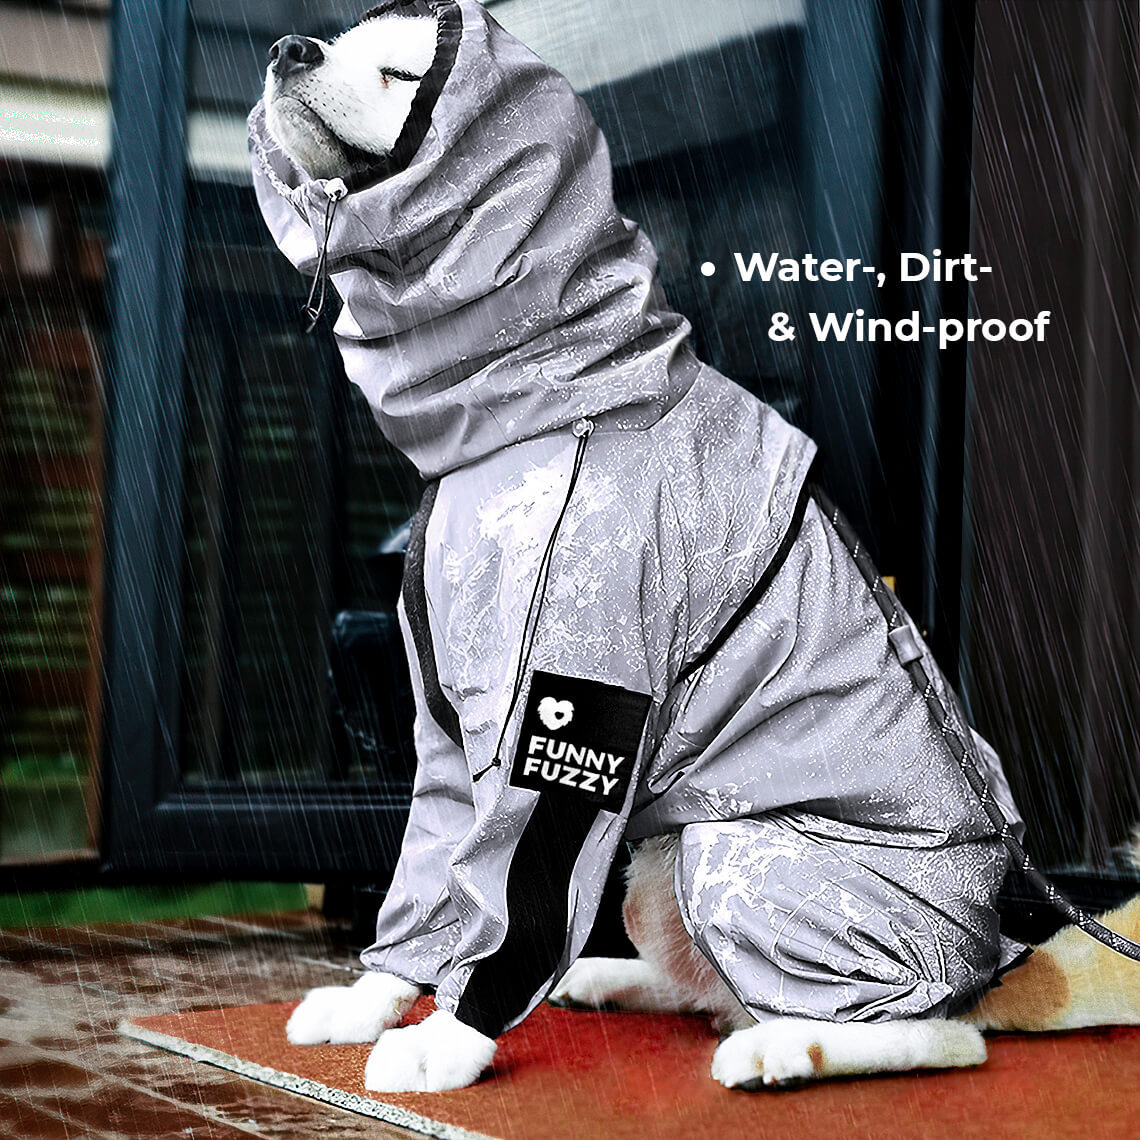 Reflective All-weather Waterproof Dog Rain Coat